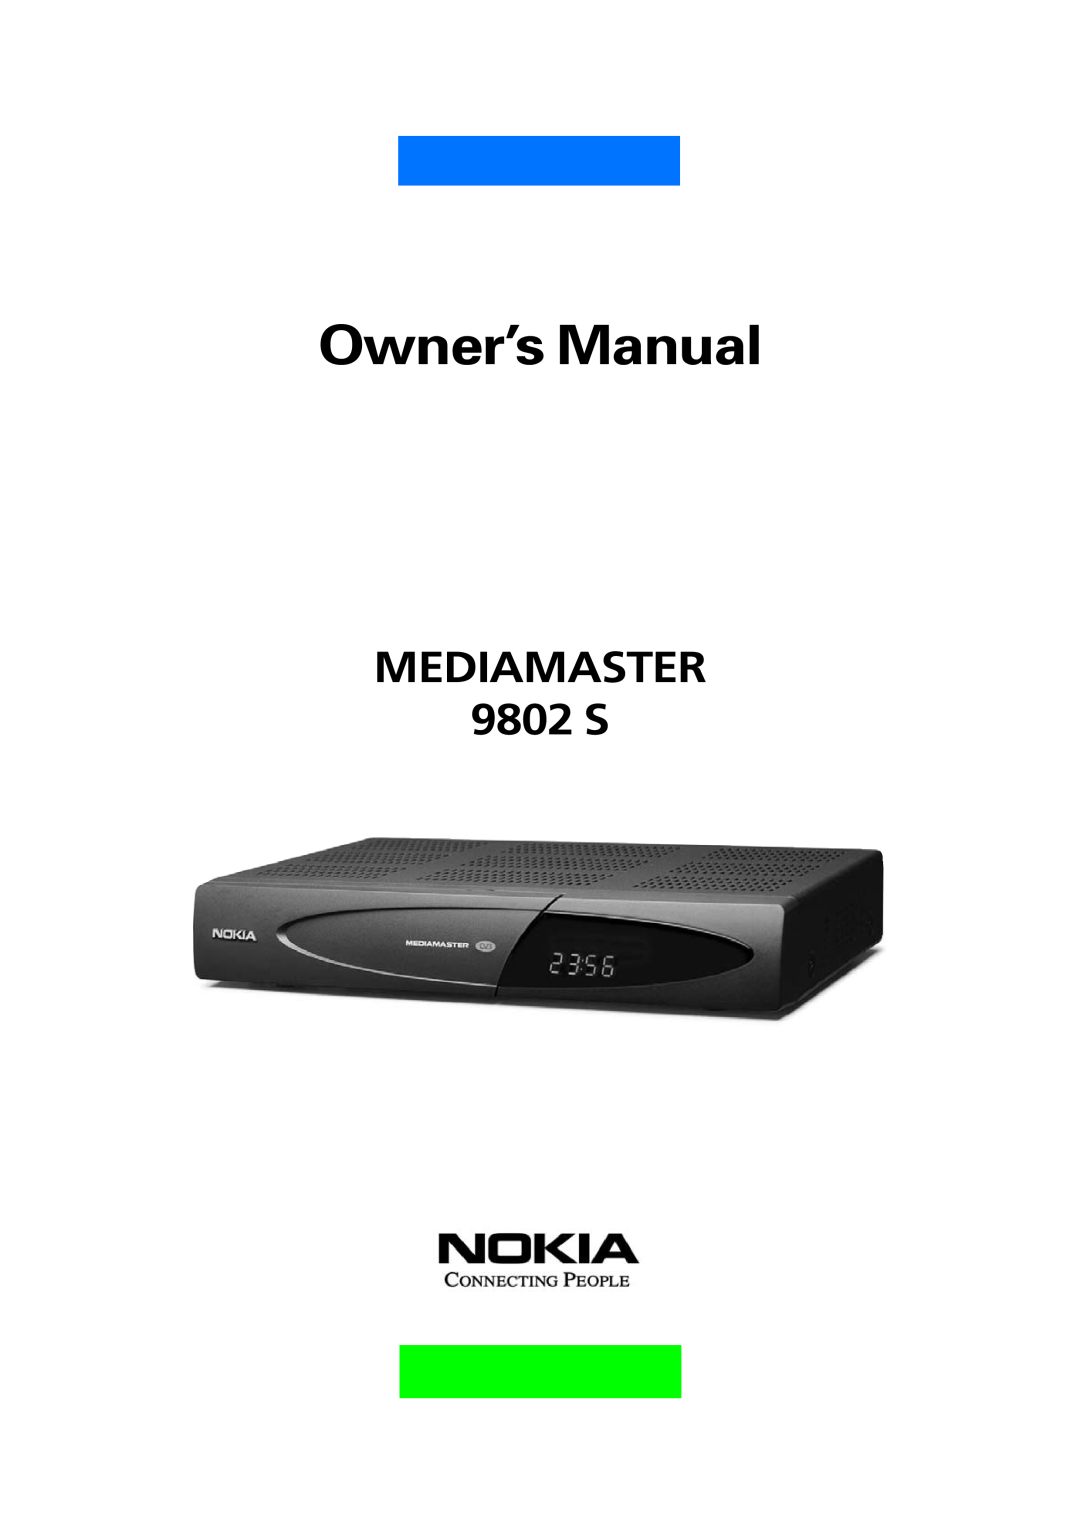 Nokia owner manual Owner’s Manual, MEDIAMASTER 9802 S 